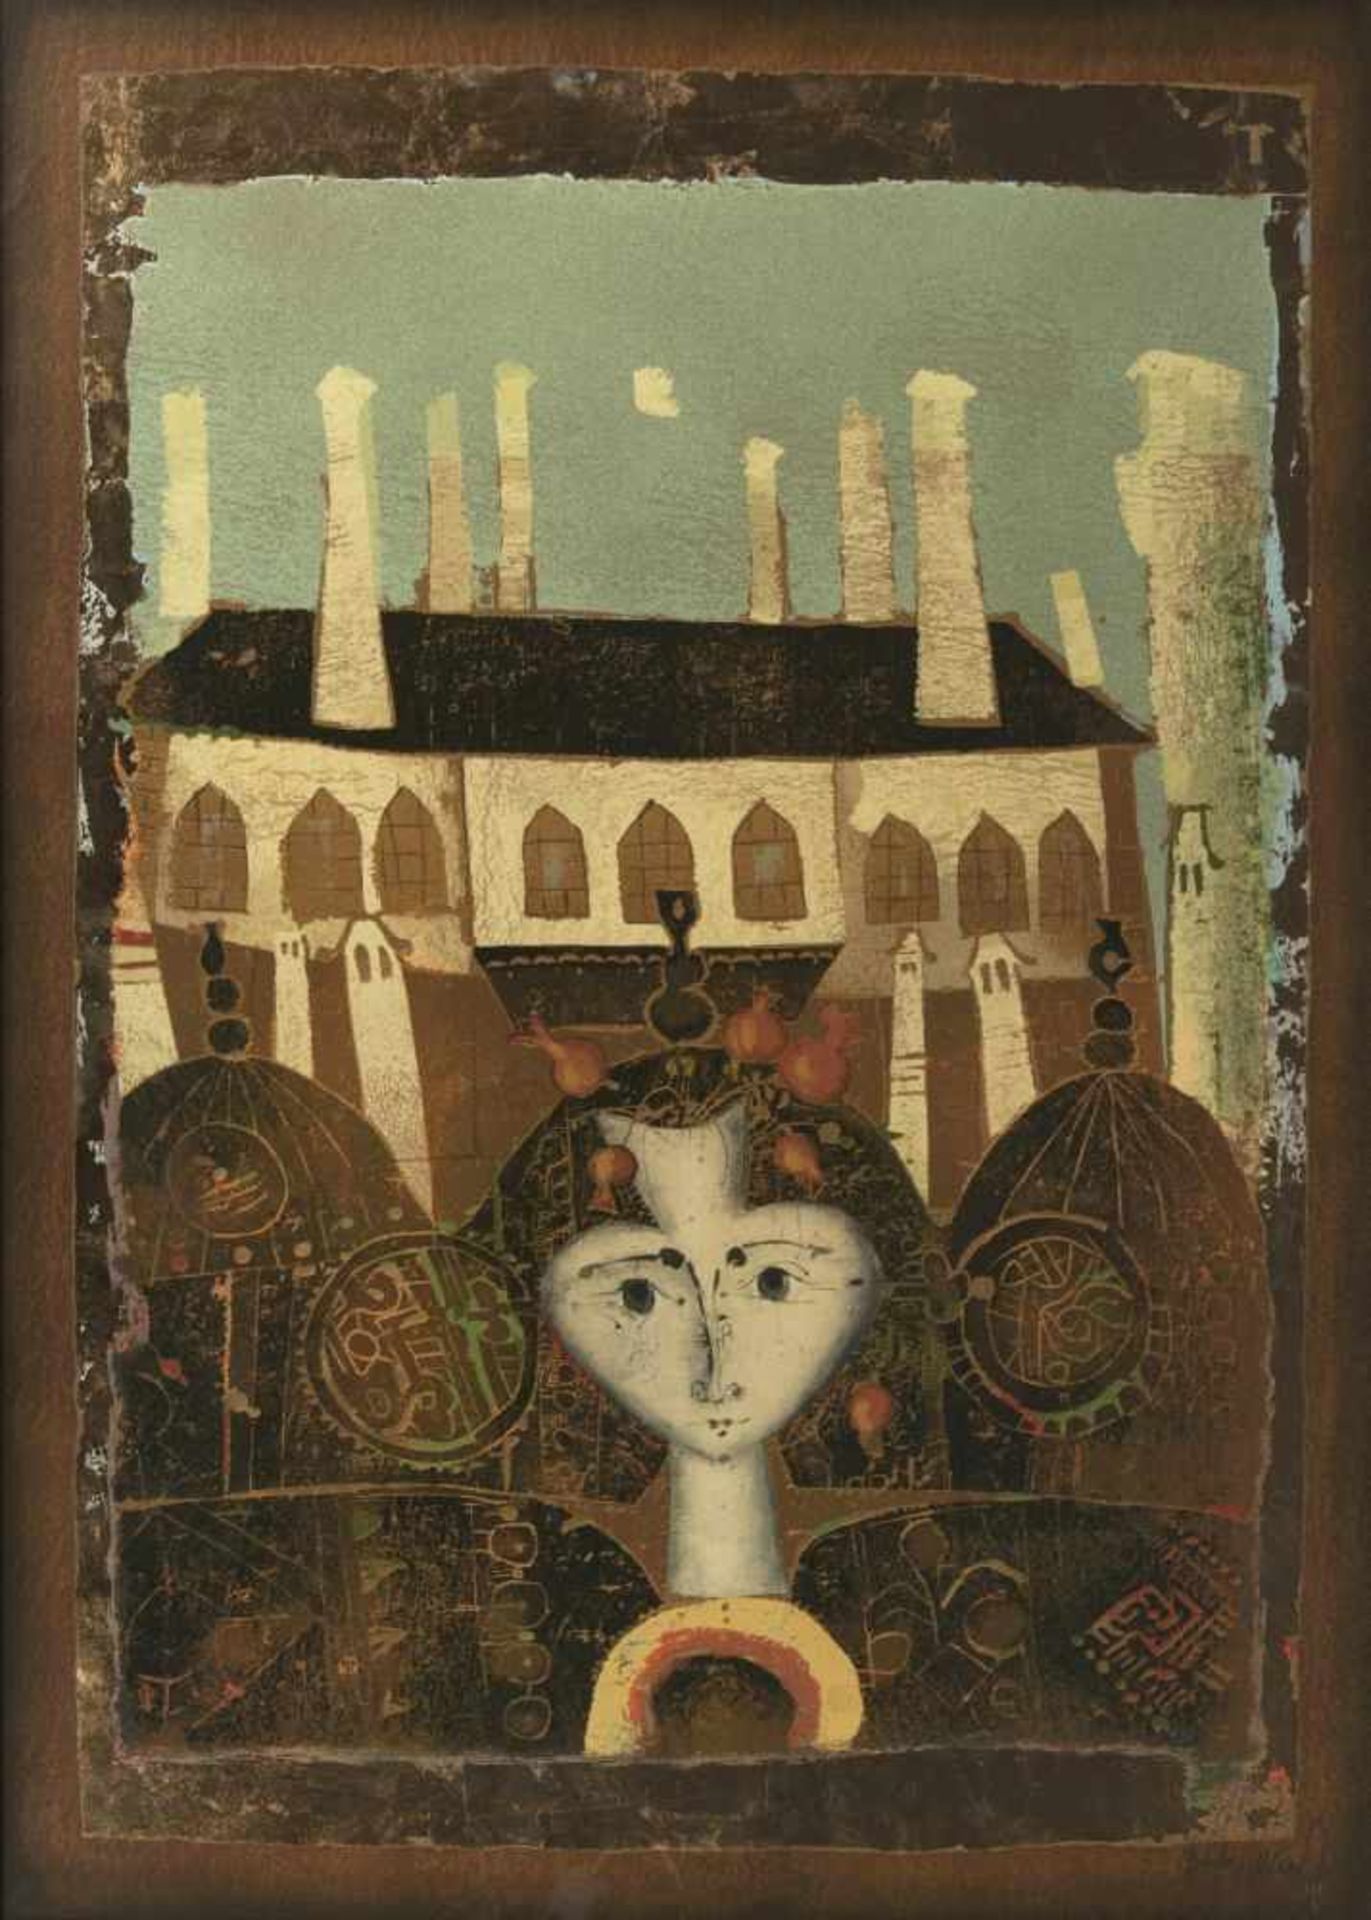 Mersad Berber(Bosanski Petrovac 1940 - Zagreb 2012)Pocitelj1975, Farblichtdruck mit Blattgold, 99,